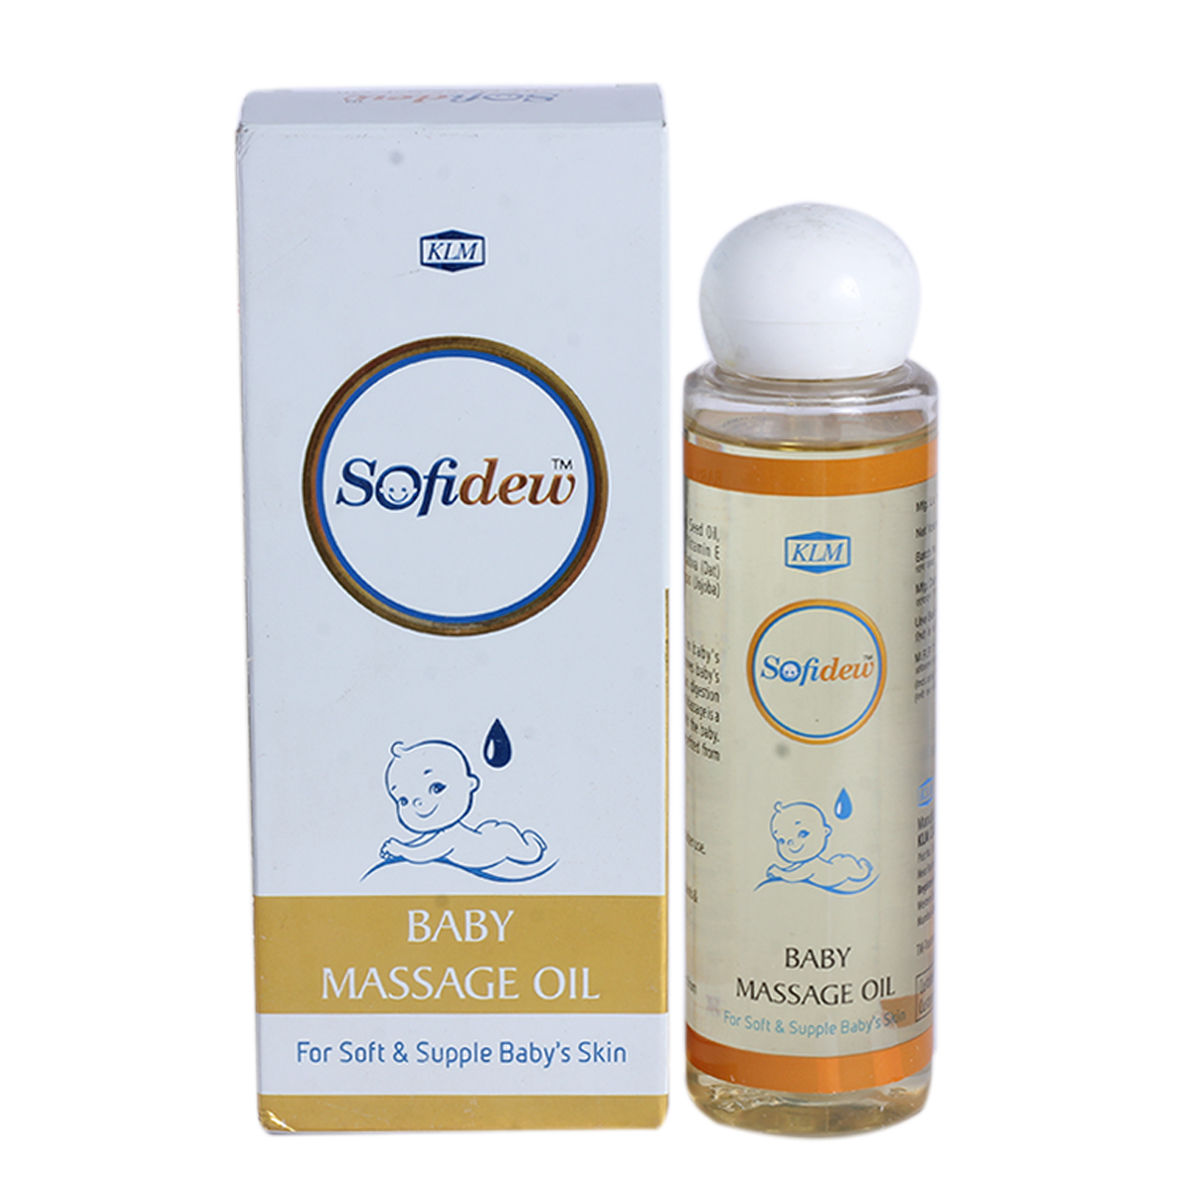 Sofidew Baby Massage Oil, 100 ml, Pack of 1 